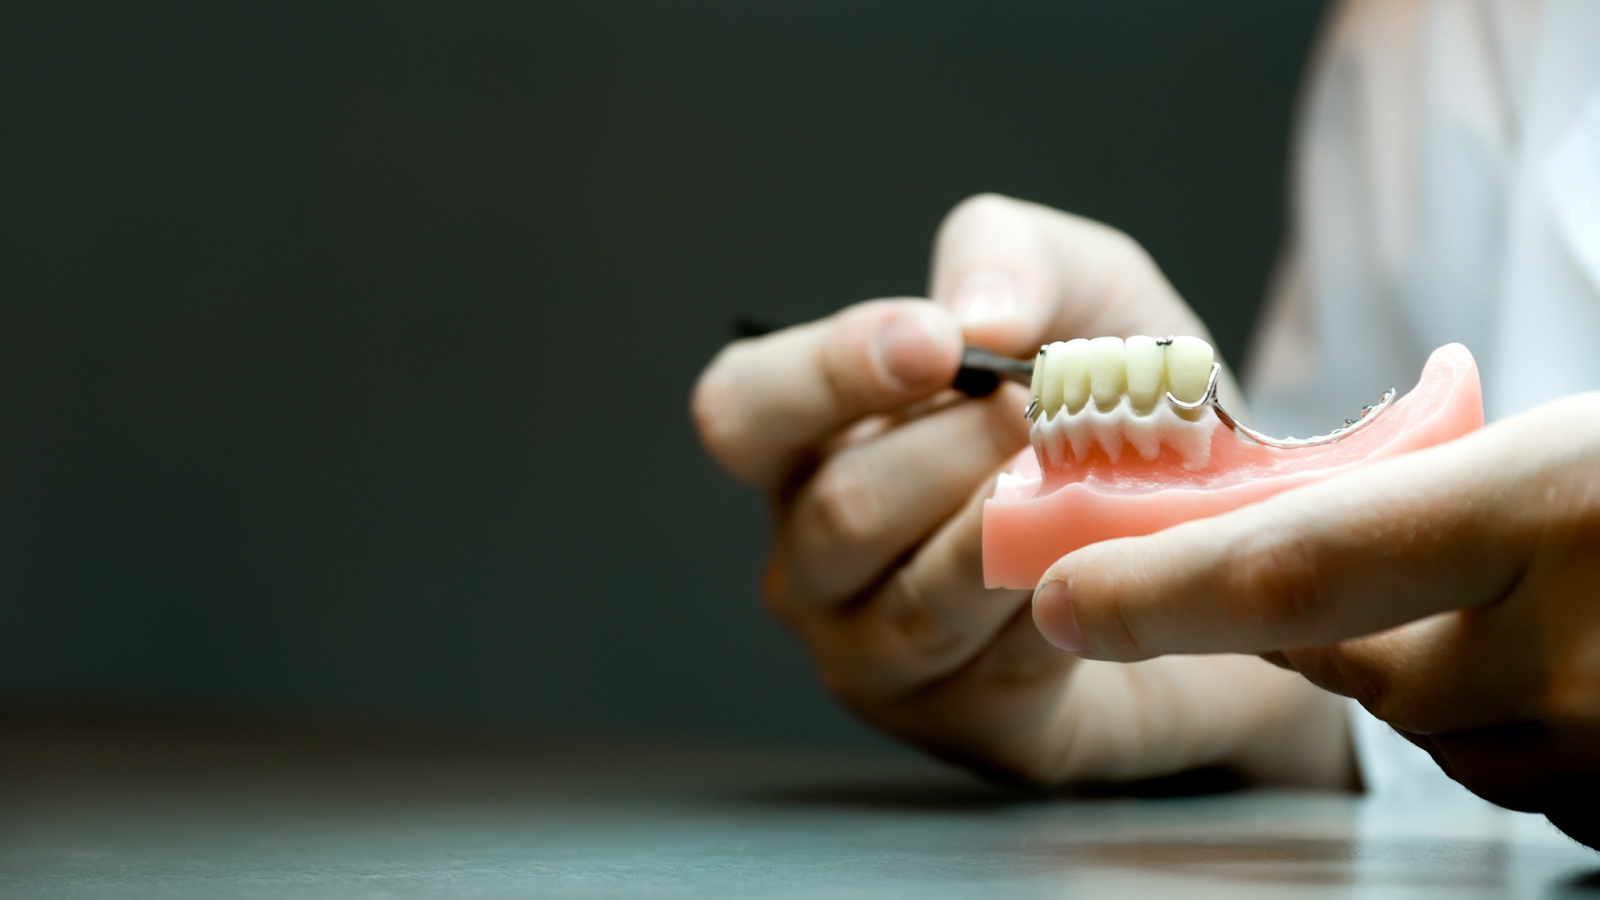 Creating Customized Dentures: How Denture Labs Meet Individual Patient Needs